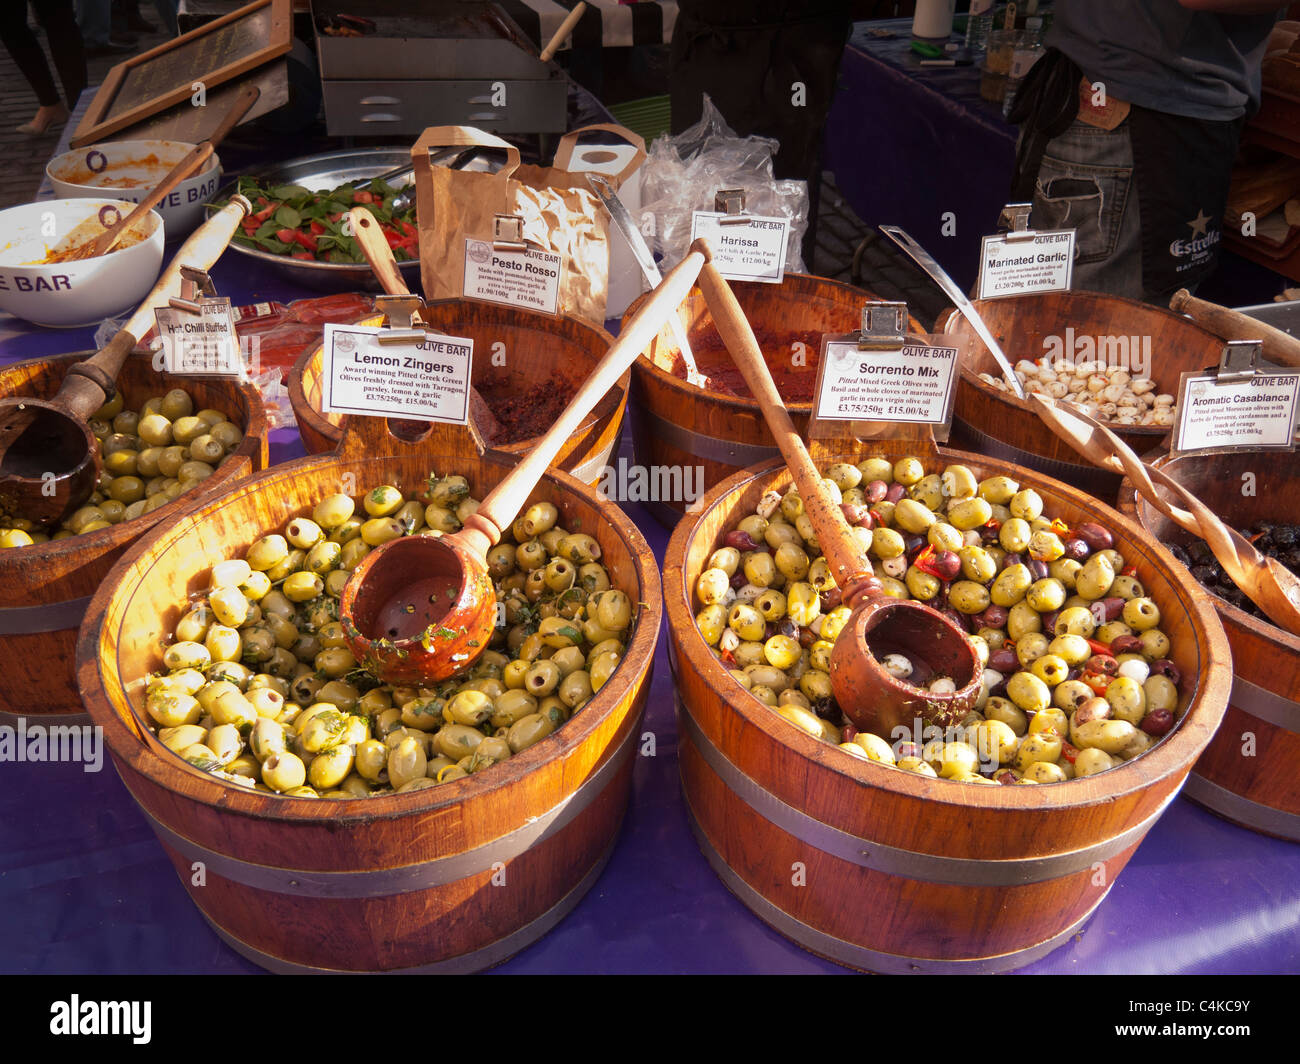 Olives and salad counter ,Borough Market,London,England Stock Photo